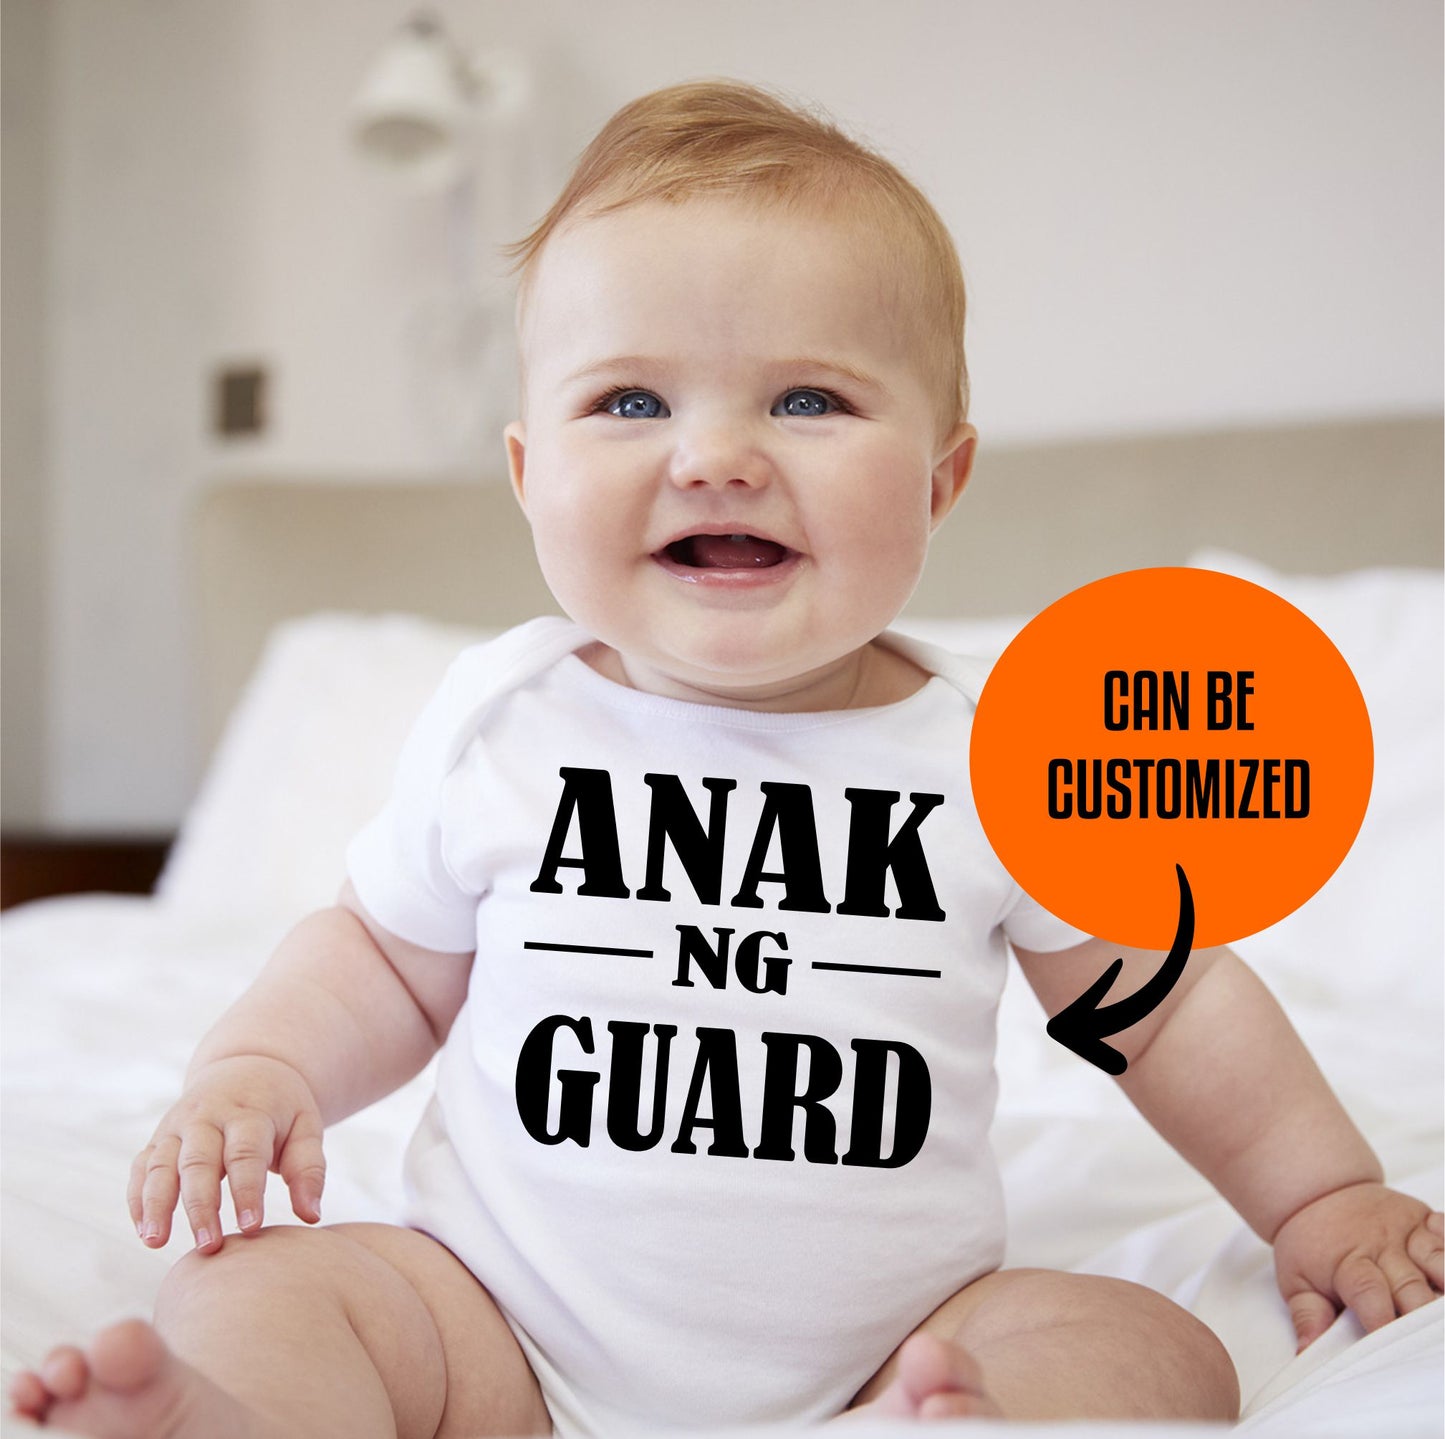 Baby Statement Onesies - Anak ng Guard